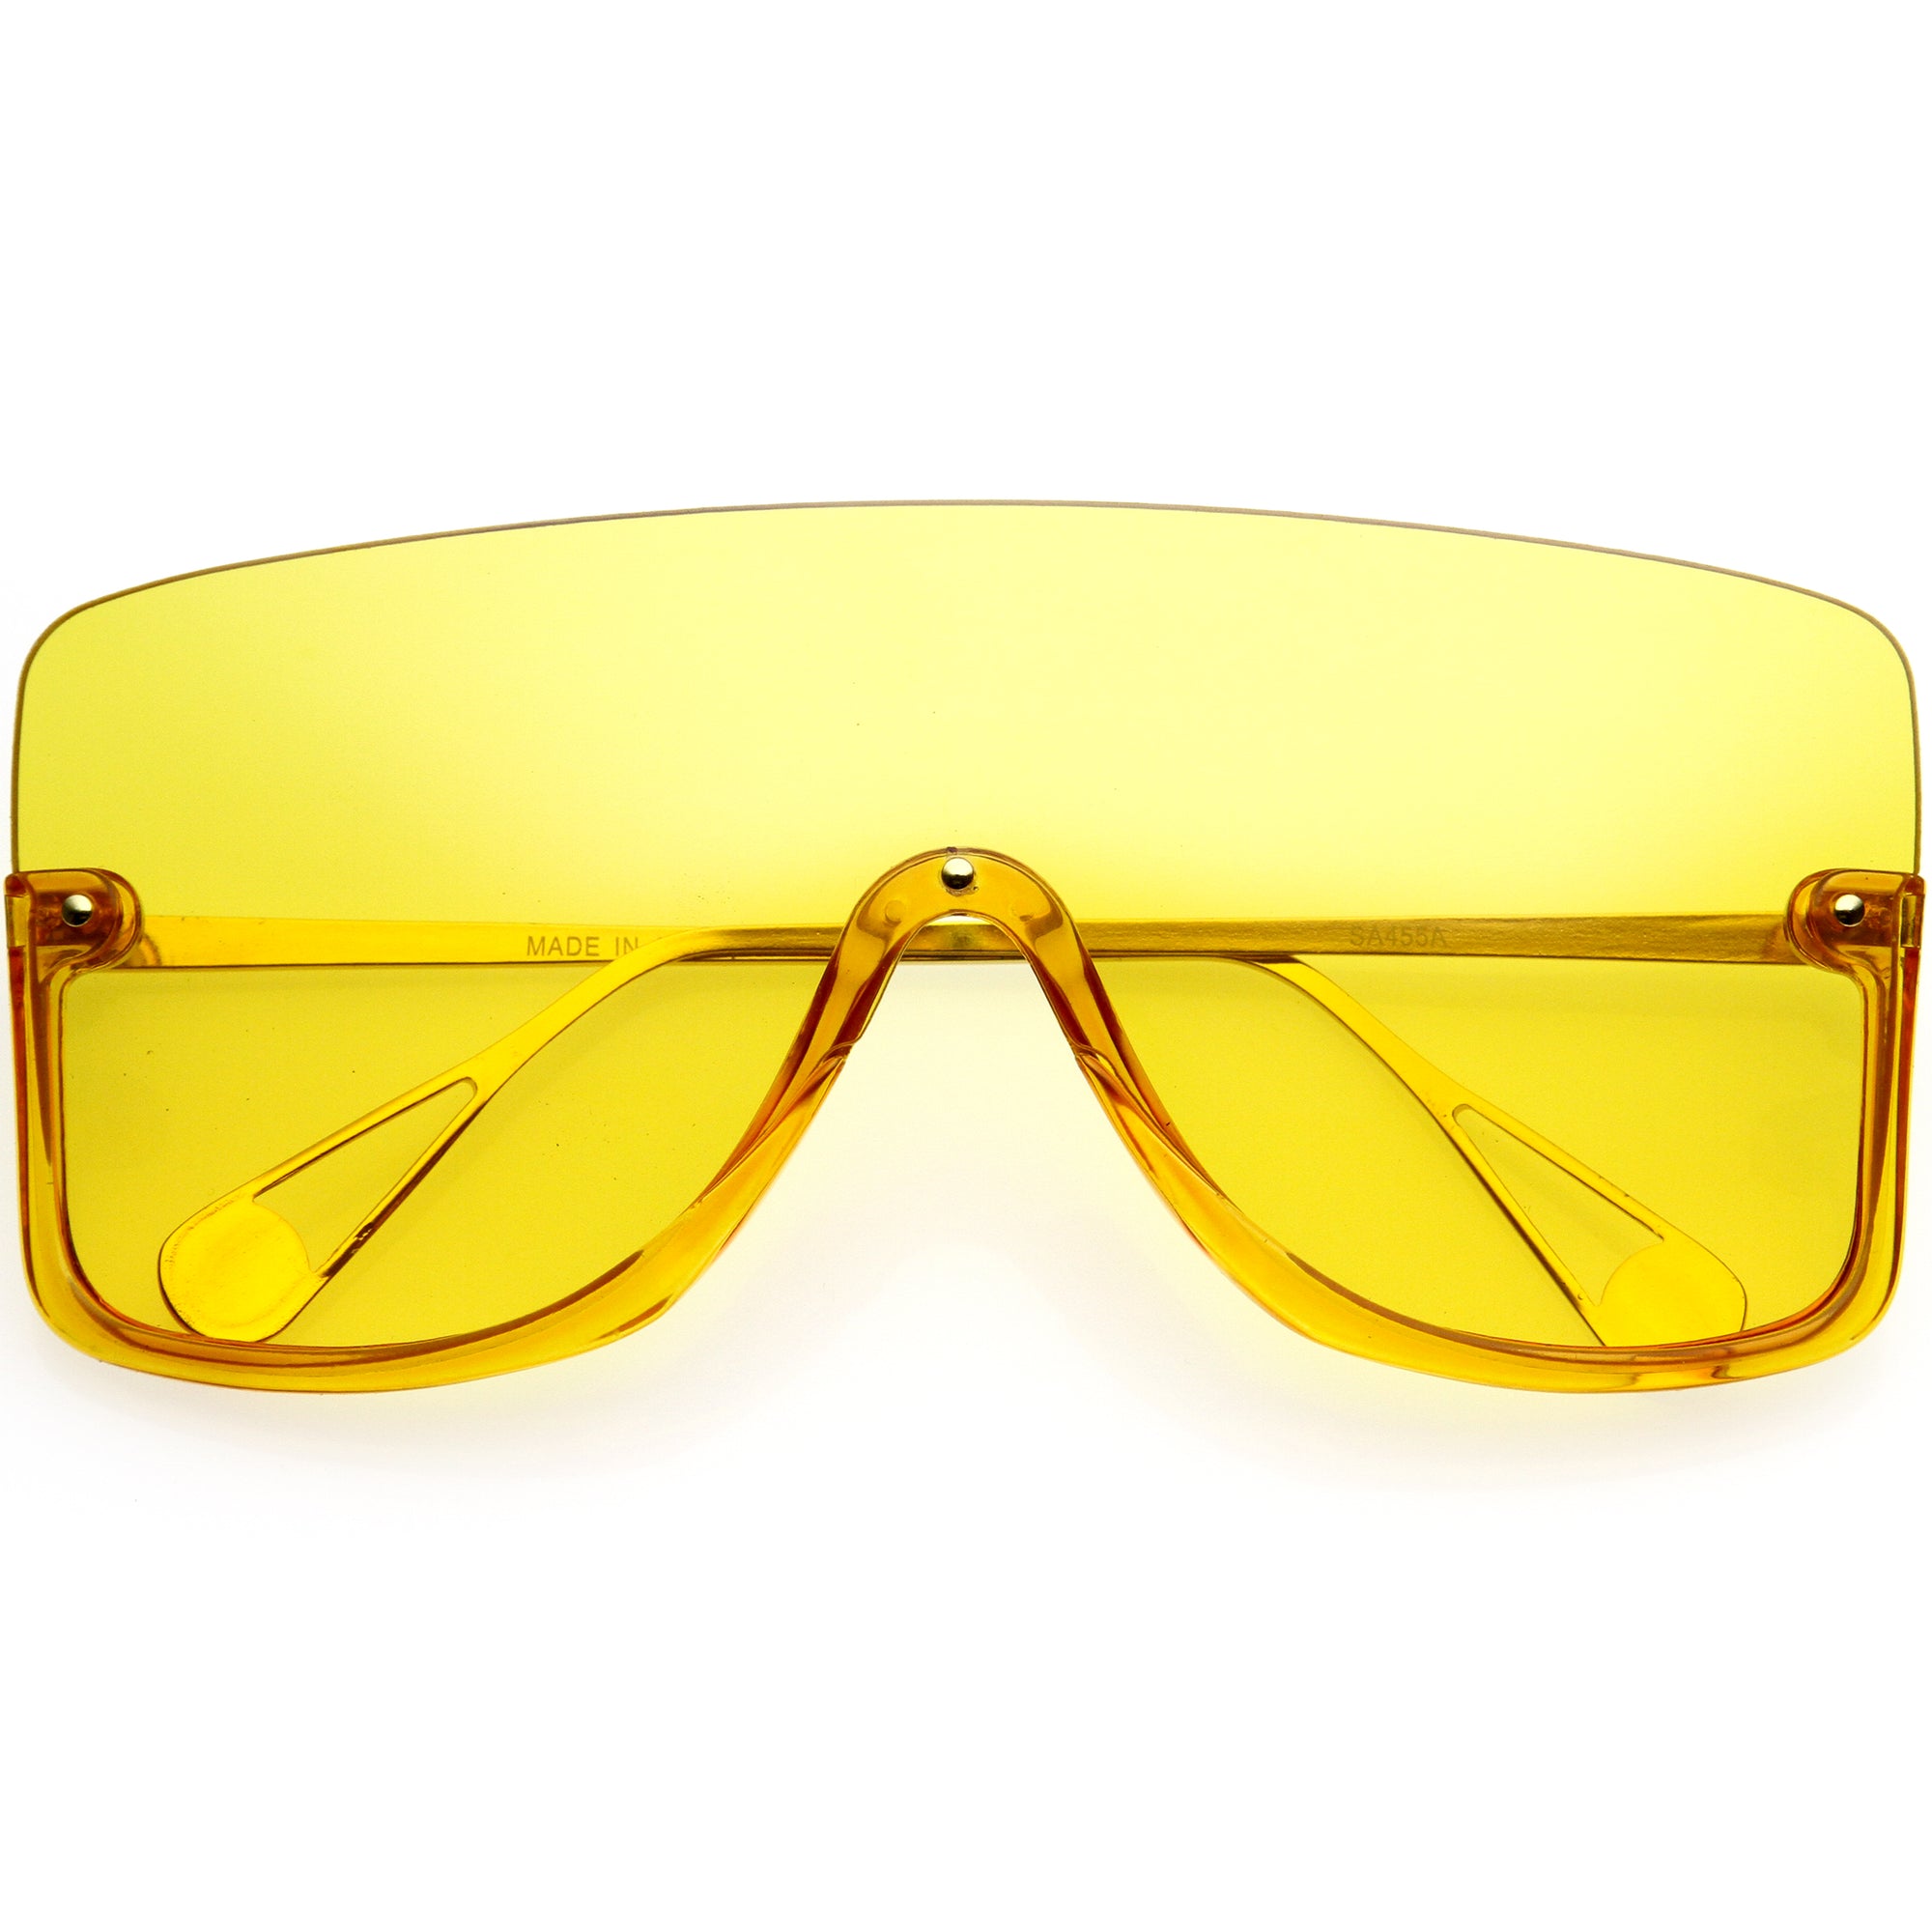 Oversize Gradient Sunglasses Women Rimless Square Big Frame Shield Sunglasses, Green Yellow Red